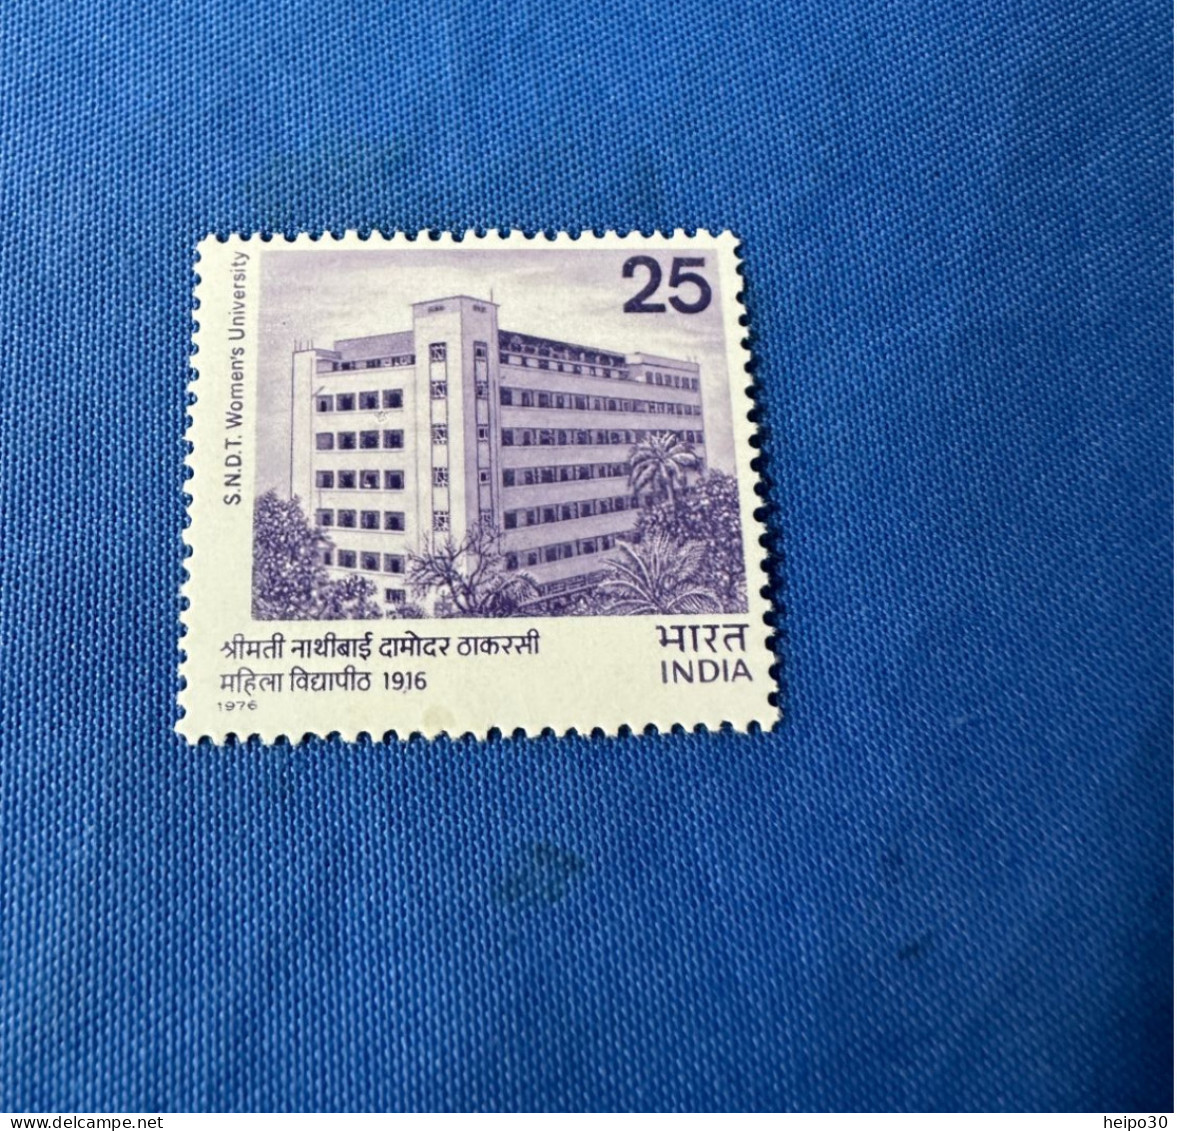 India 1976 Michel 687 SNDT Frauen Universität MNH - Unused Stamps